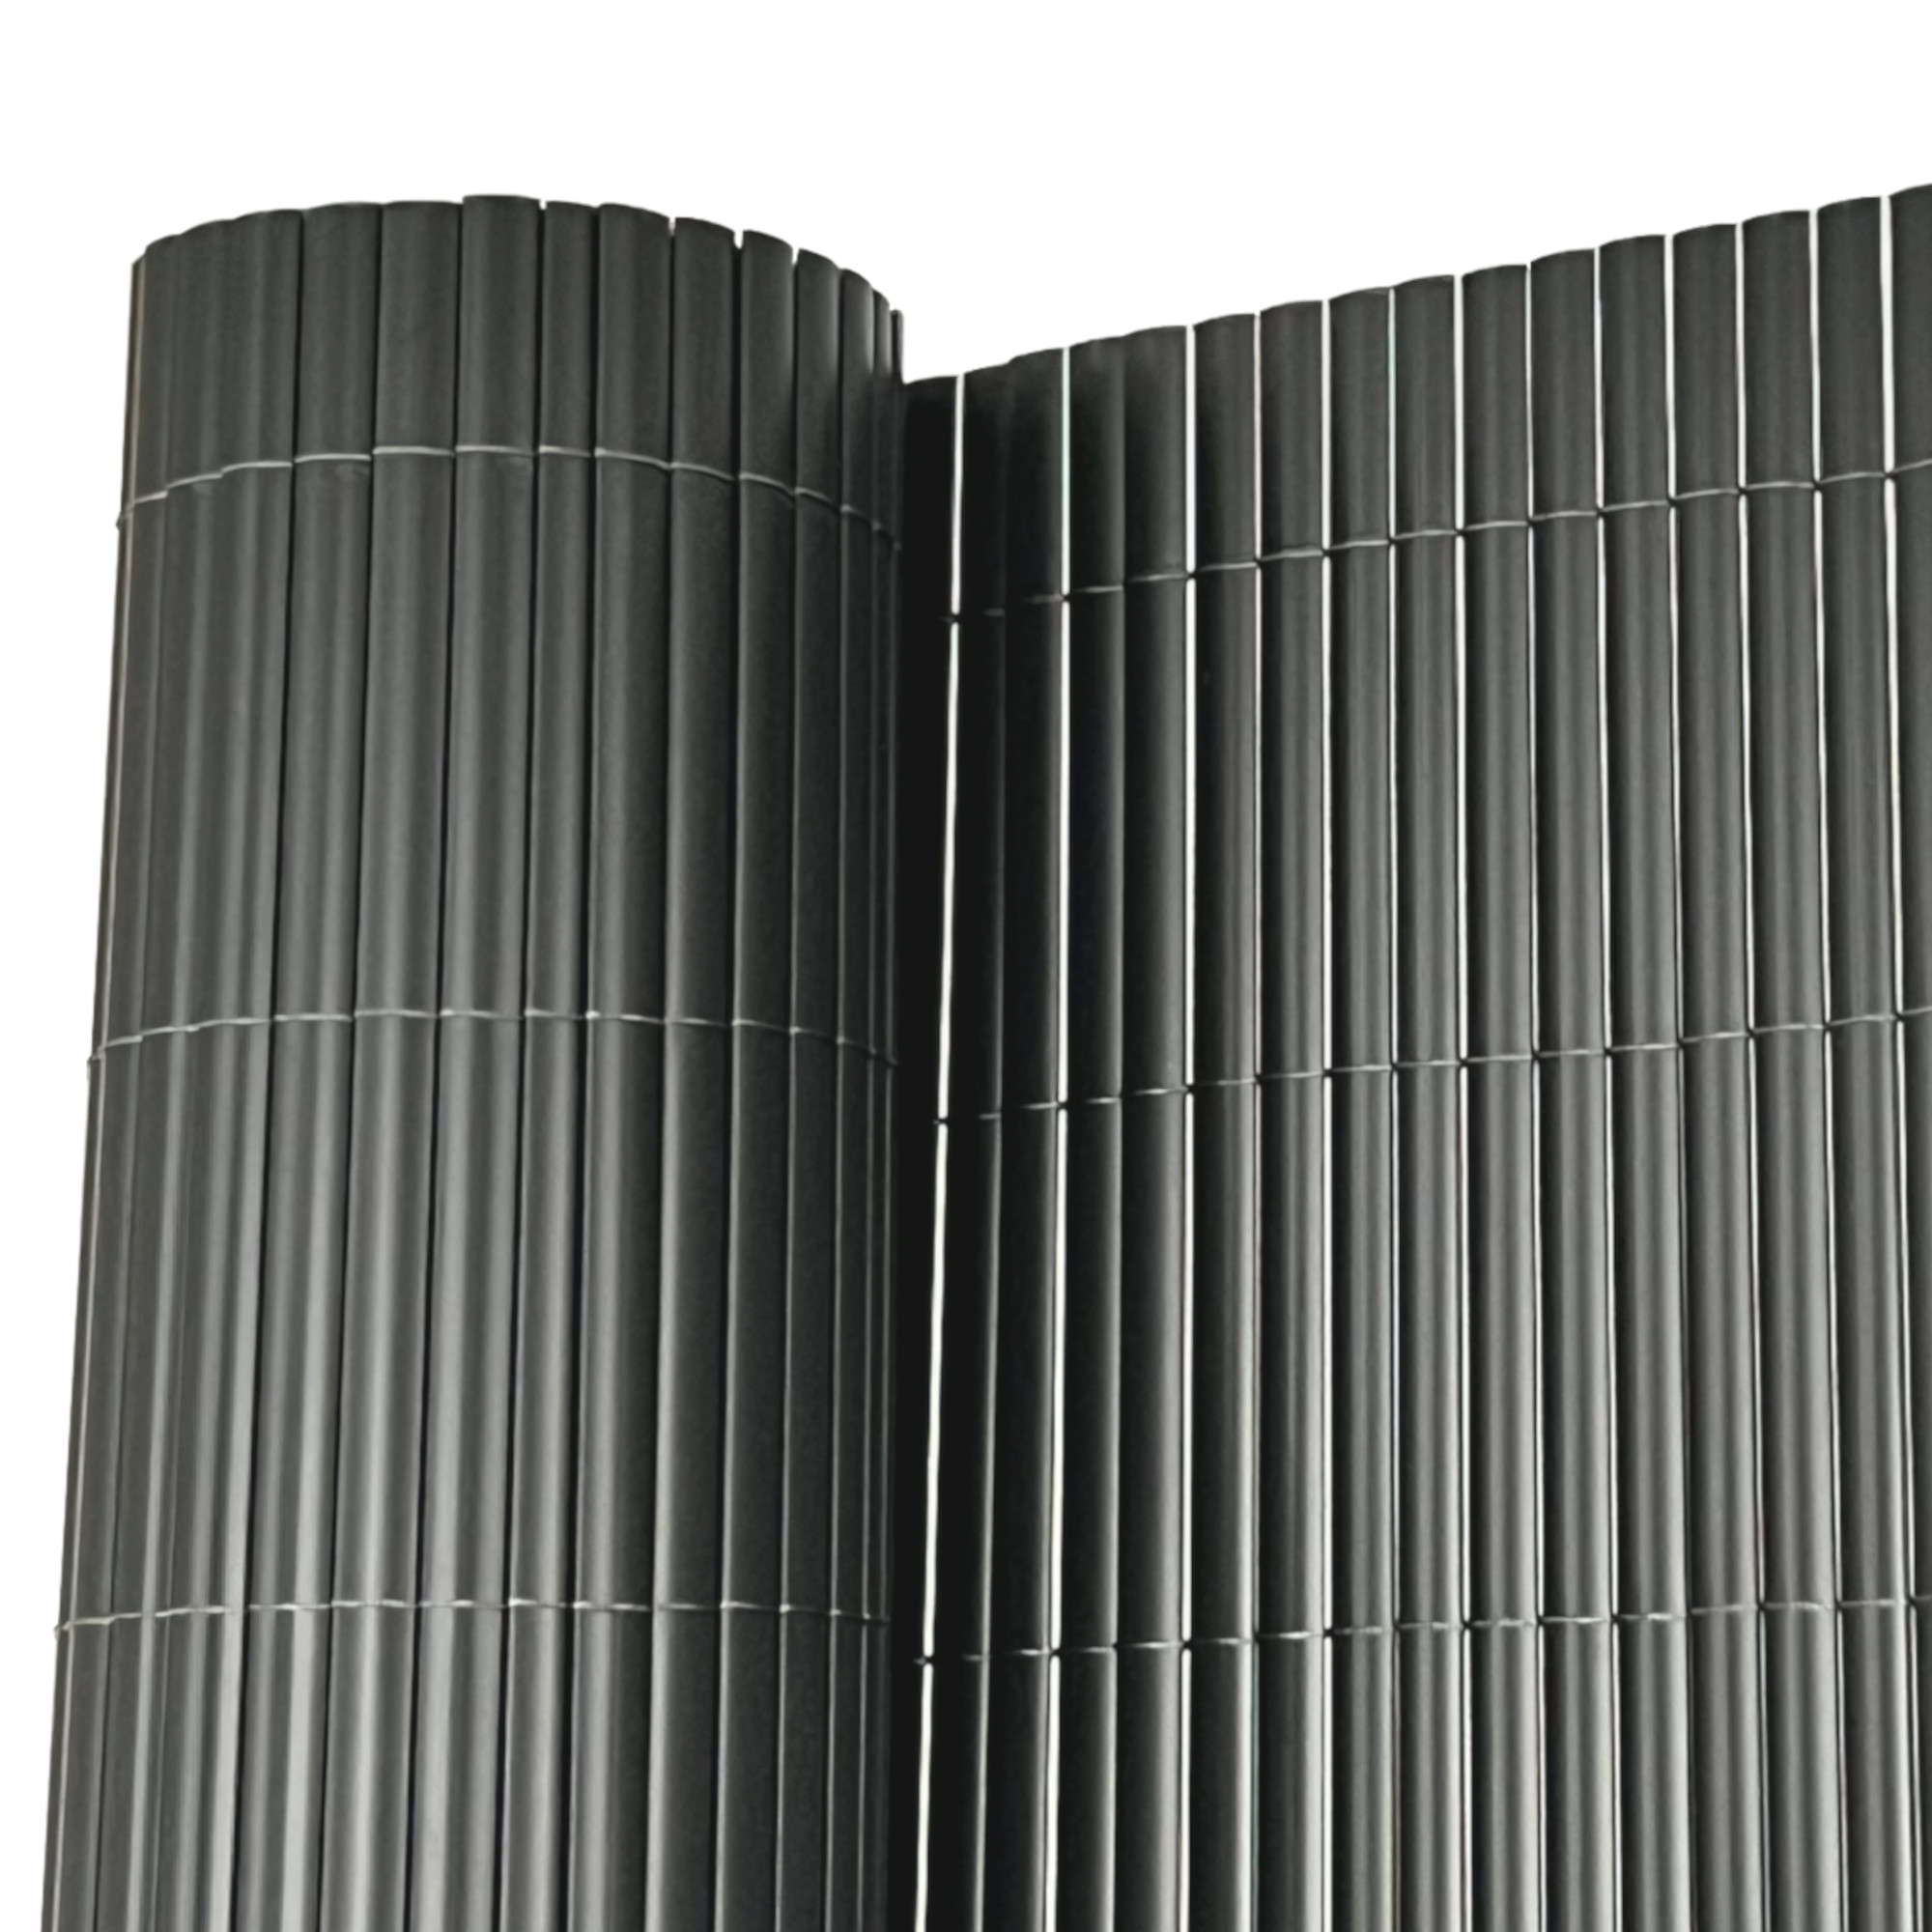 5m x 1.2m PVC Fencing (Grey) - Click Image to Close